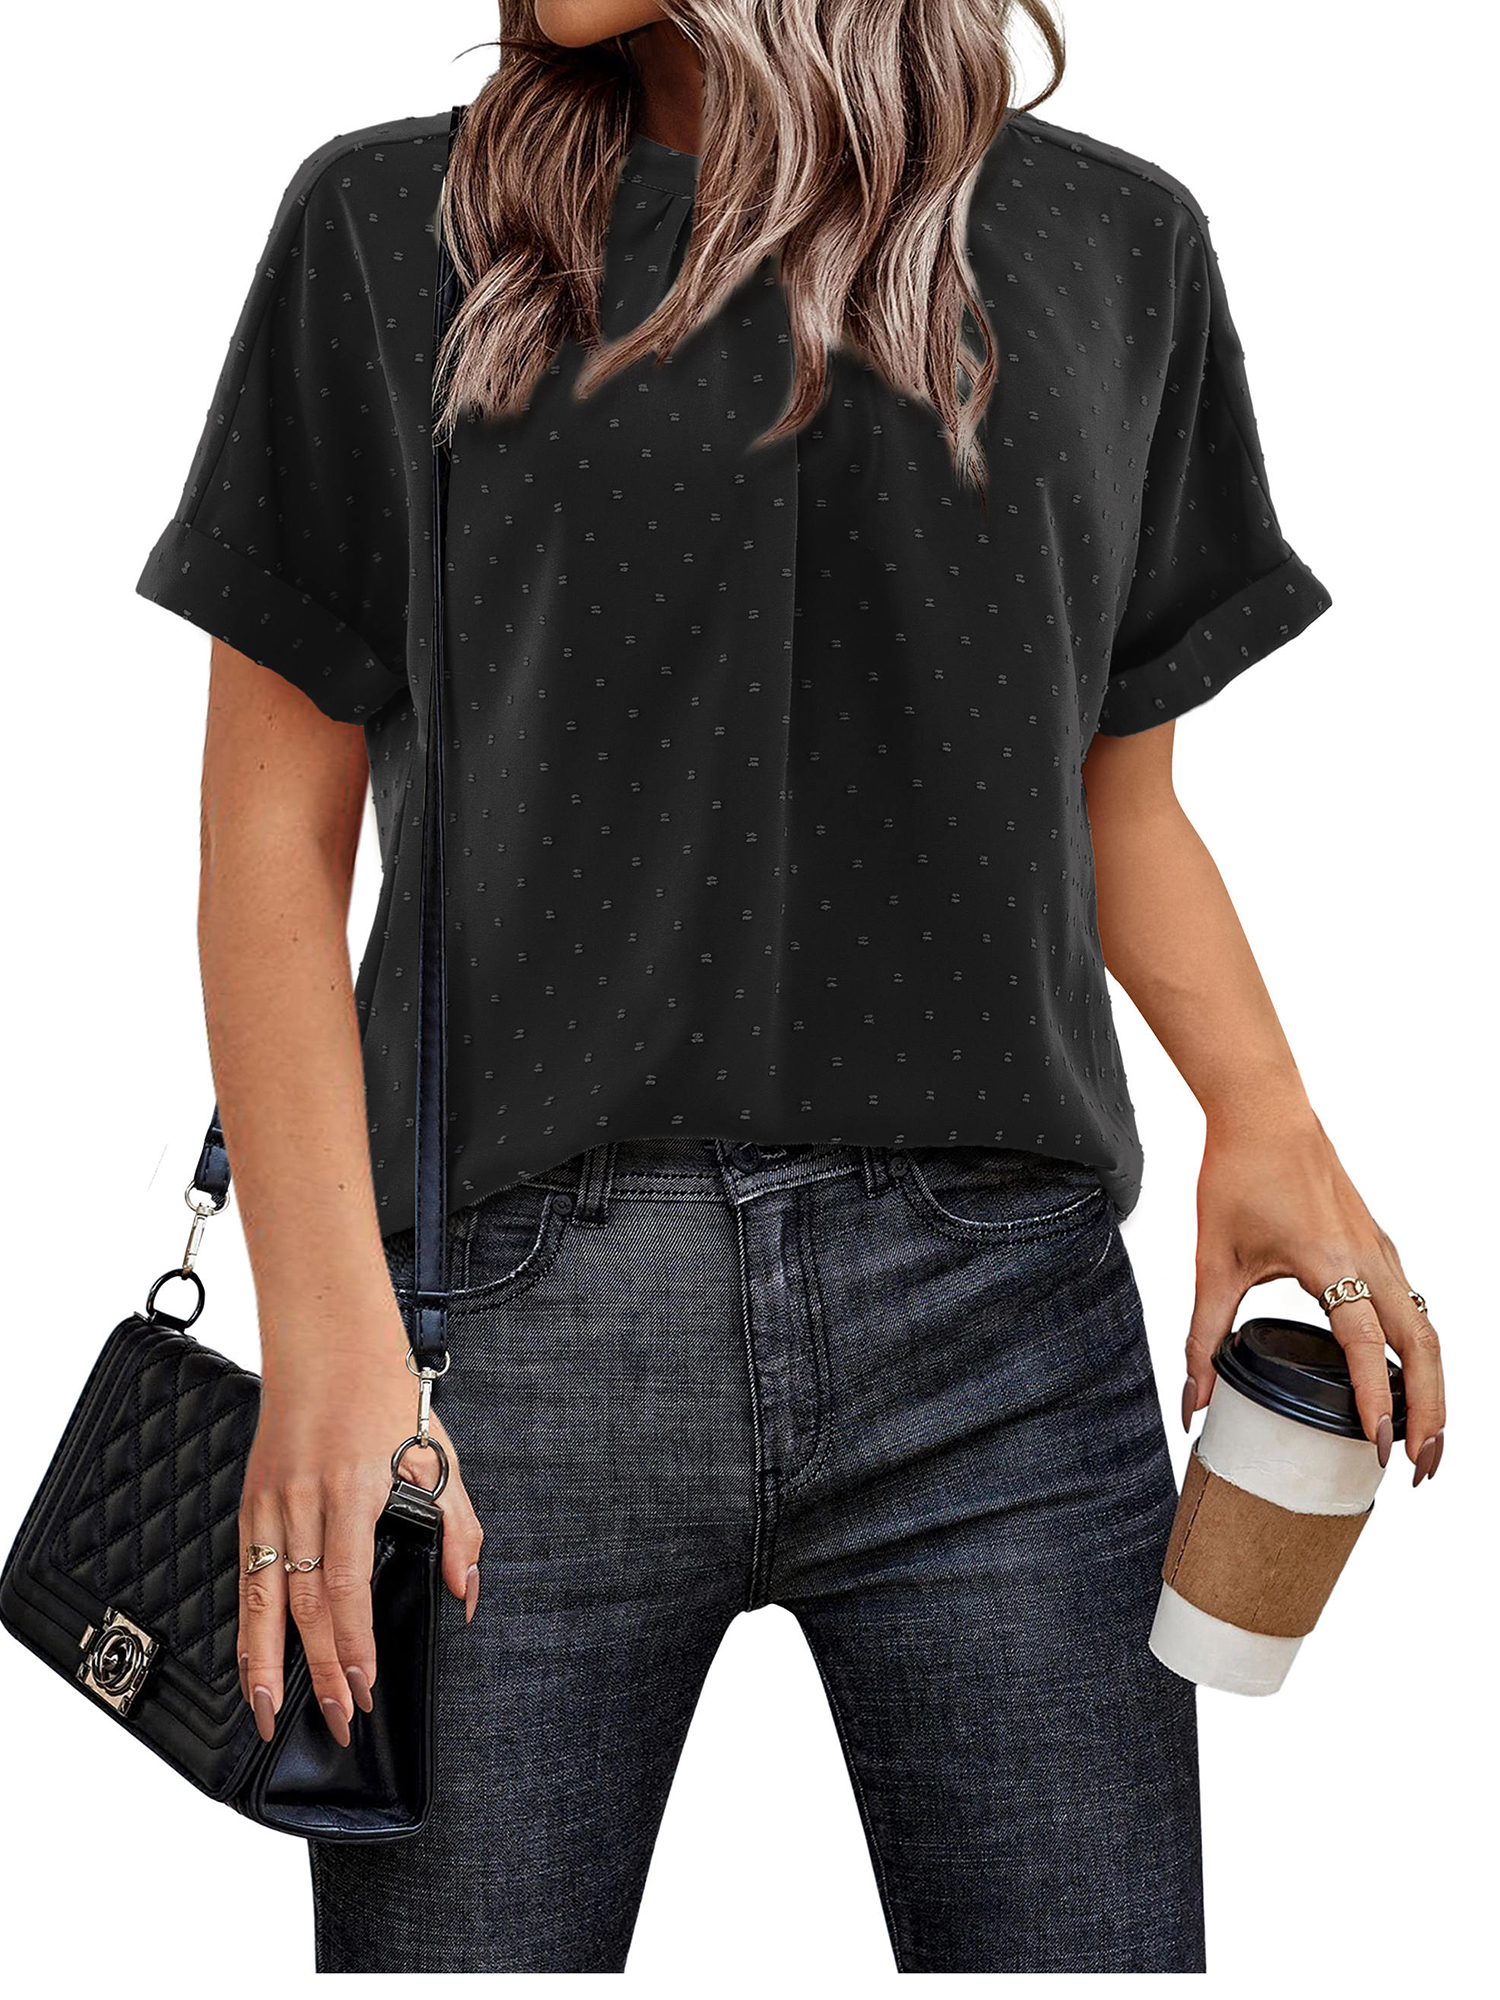 Amoretu Swiss Dot Tops for Womens Summer Crewneck Roll Up Short Sleeve Tunic Shirts Casual Work Office Blouse Shirt Black XL - image 1 of 5